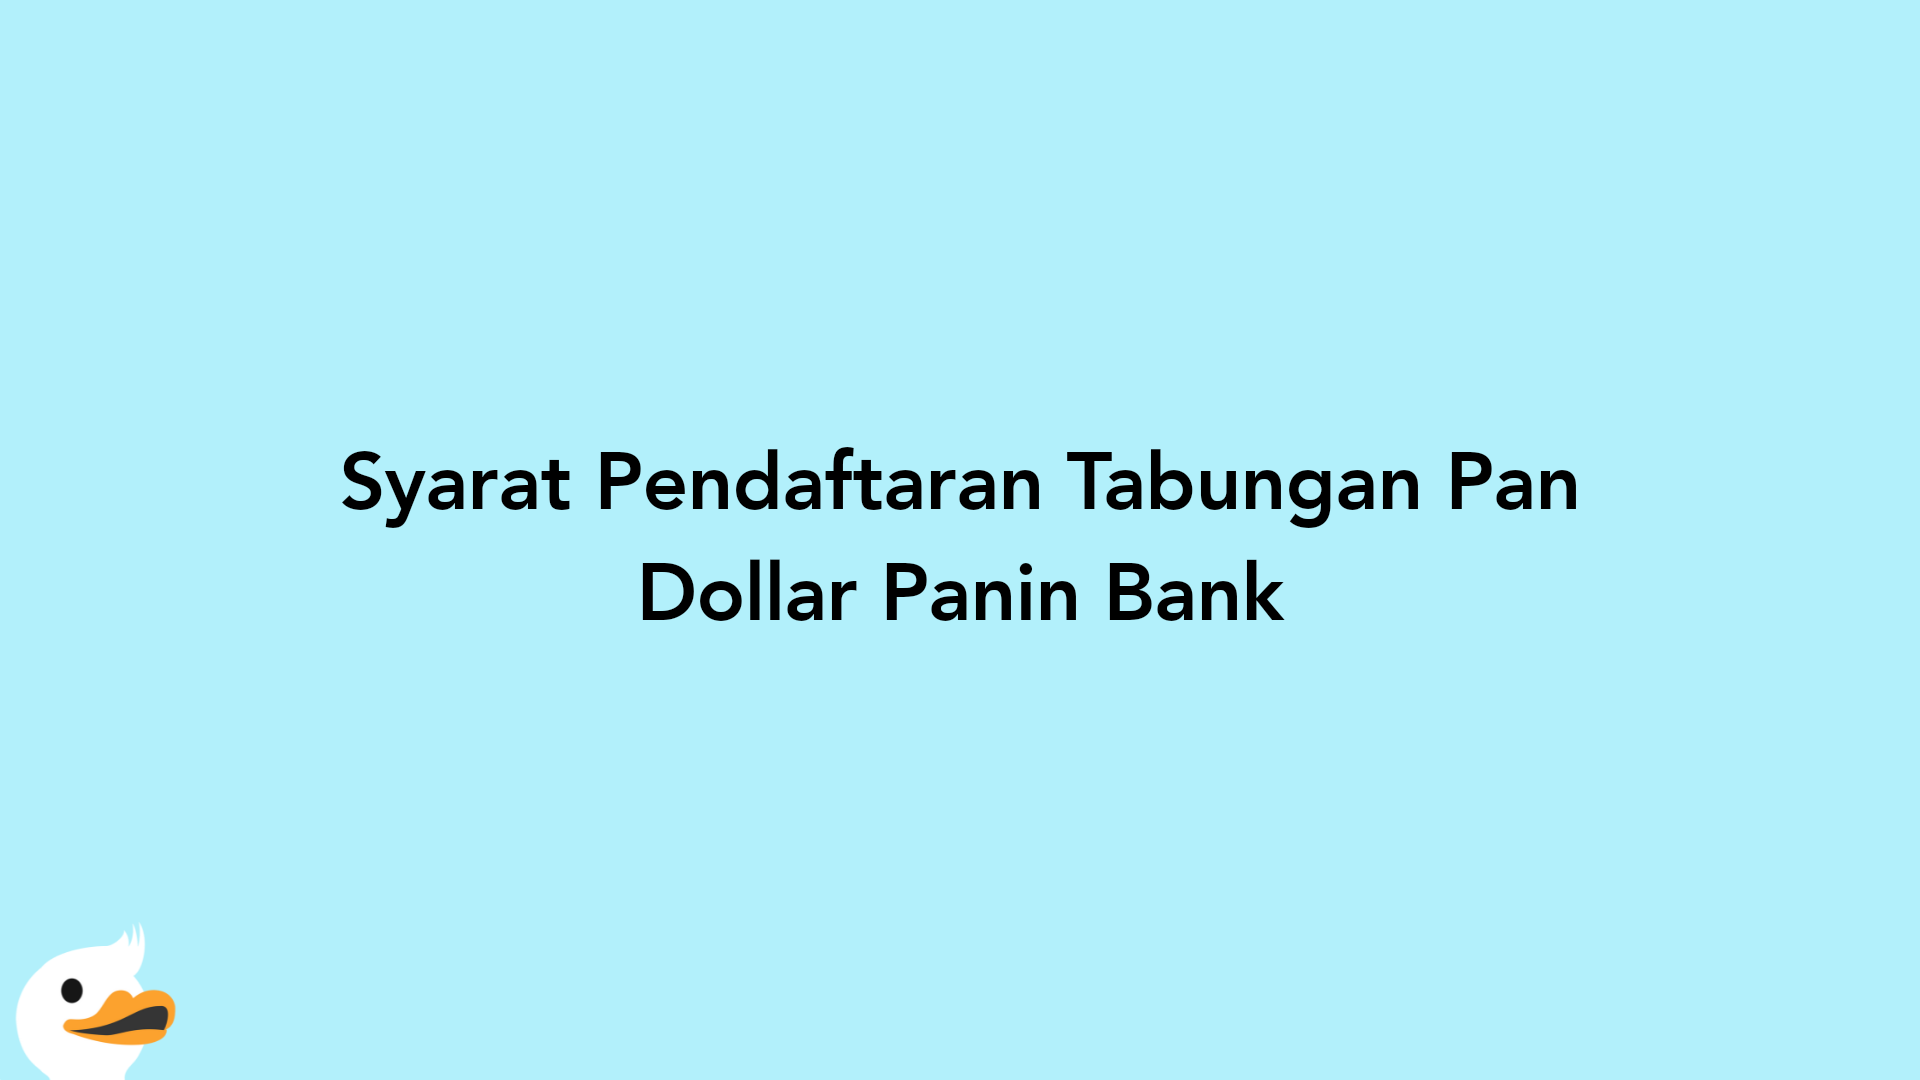 Syarat Pendaftaran Tabungan Pan Dollar Panin Bank